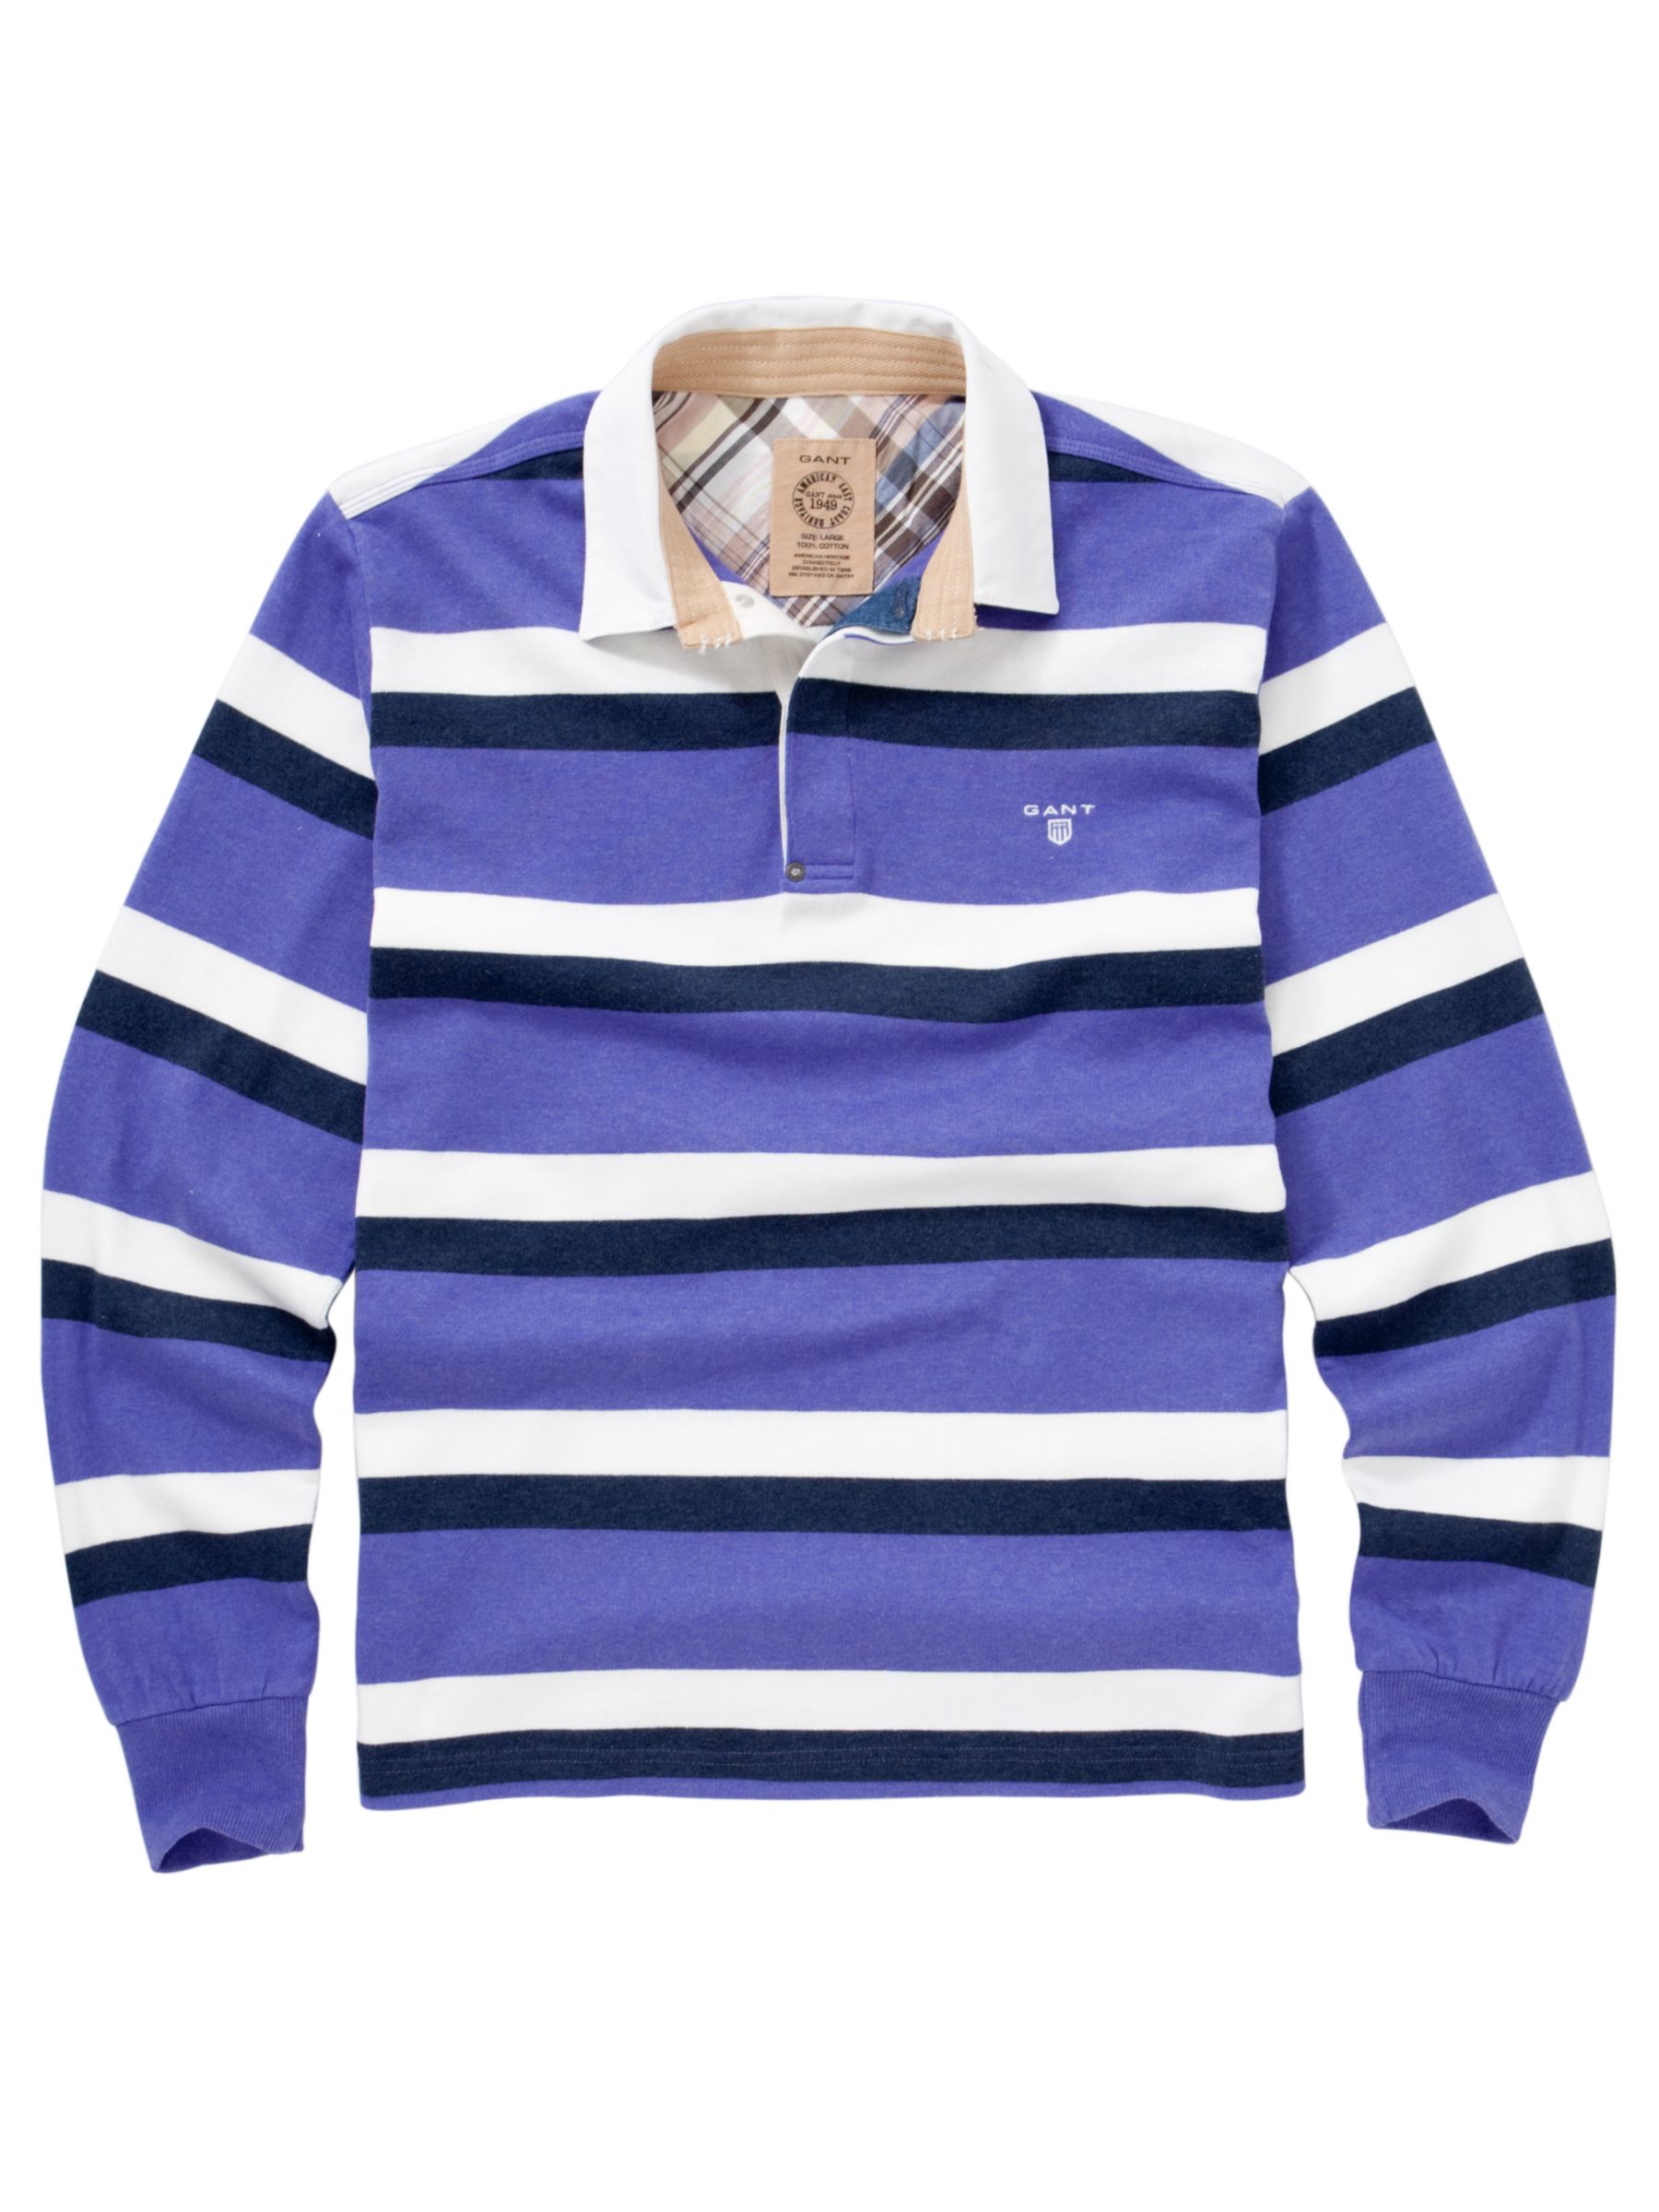 Gant Stripe Rugby Shirt, Purple